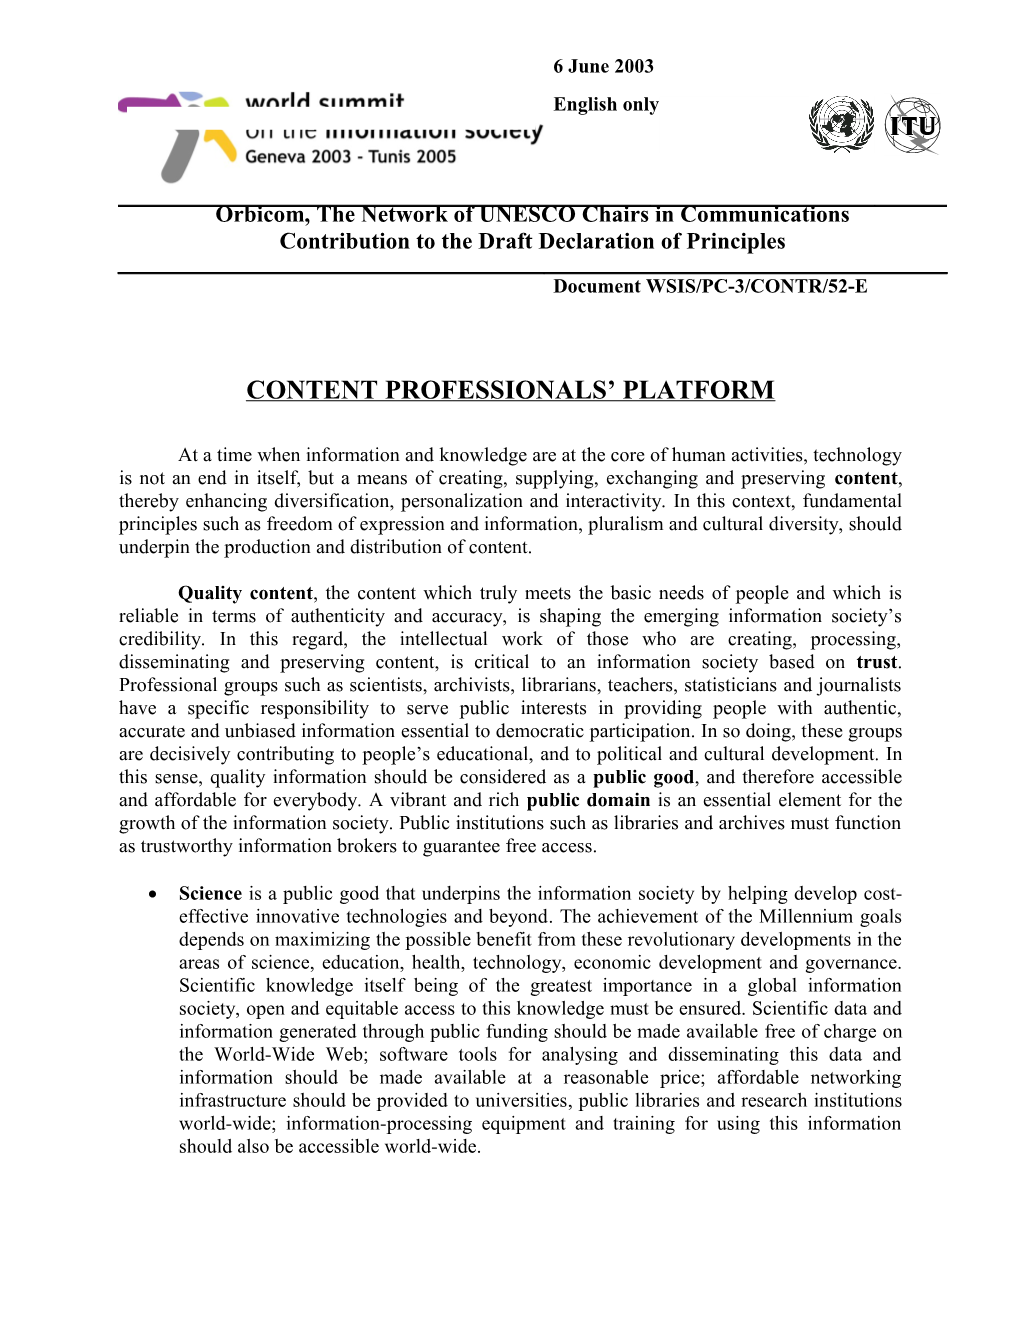 Content Professionals Platform